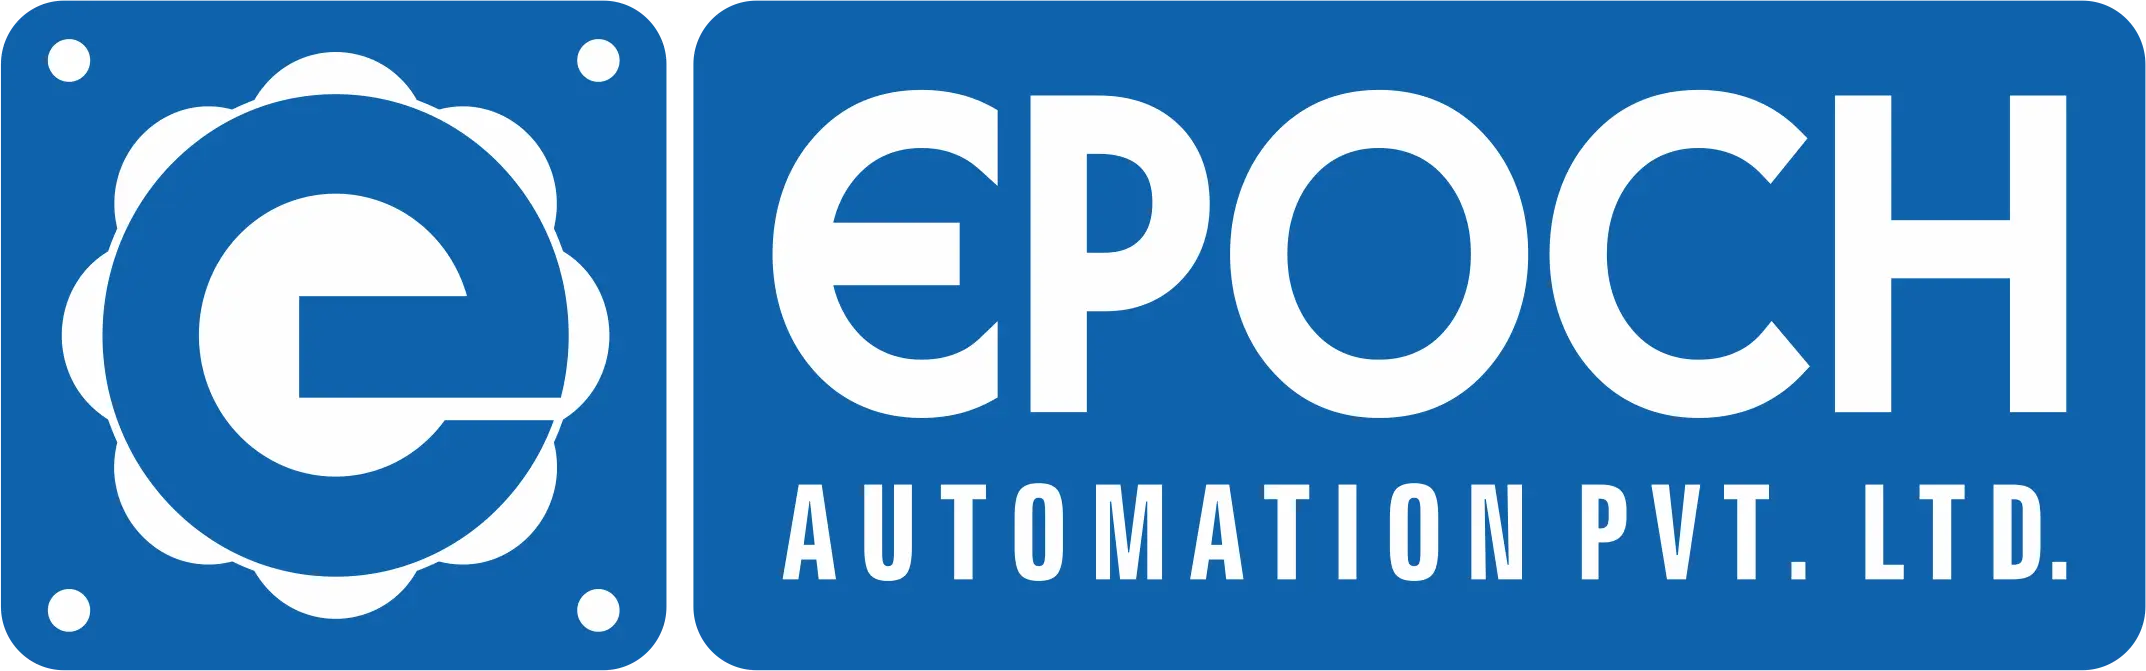 epoch automation logo high resolution